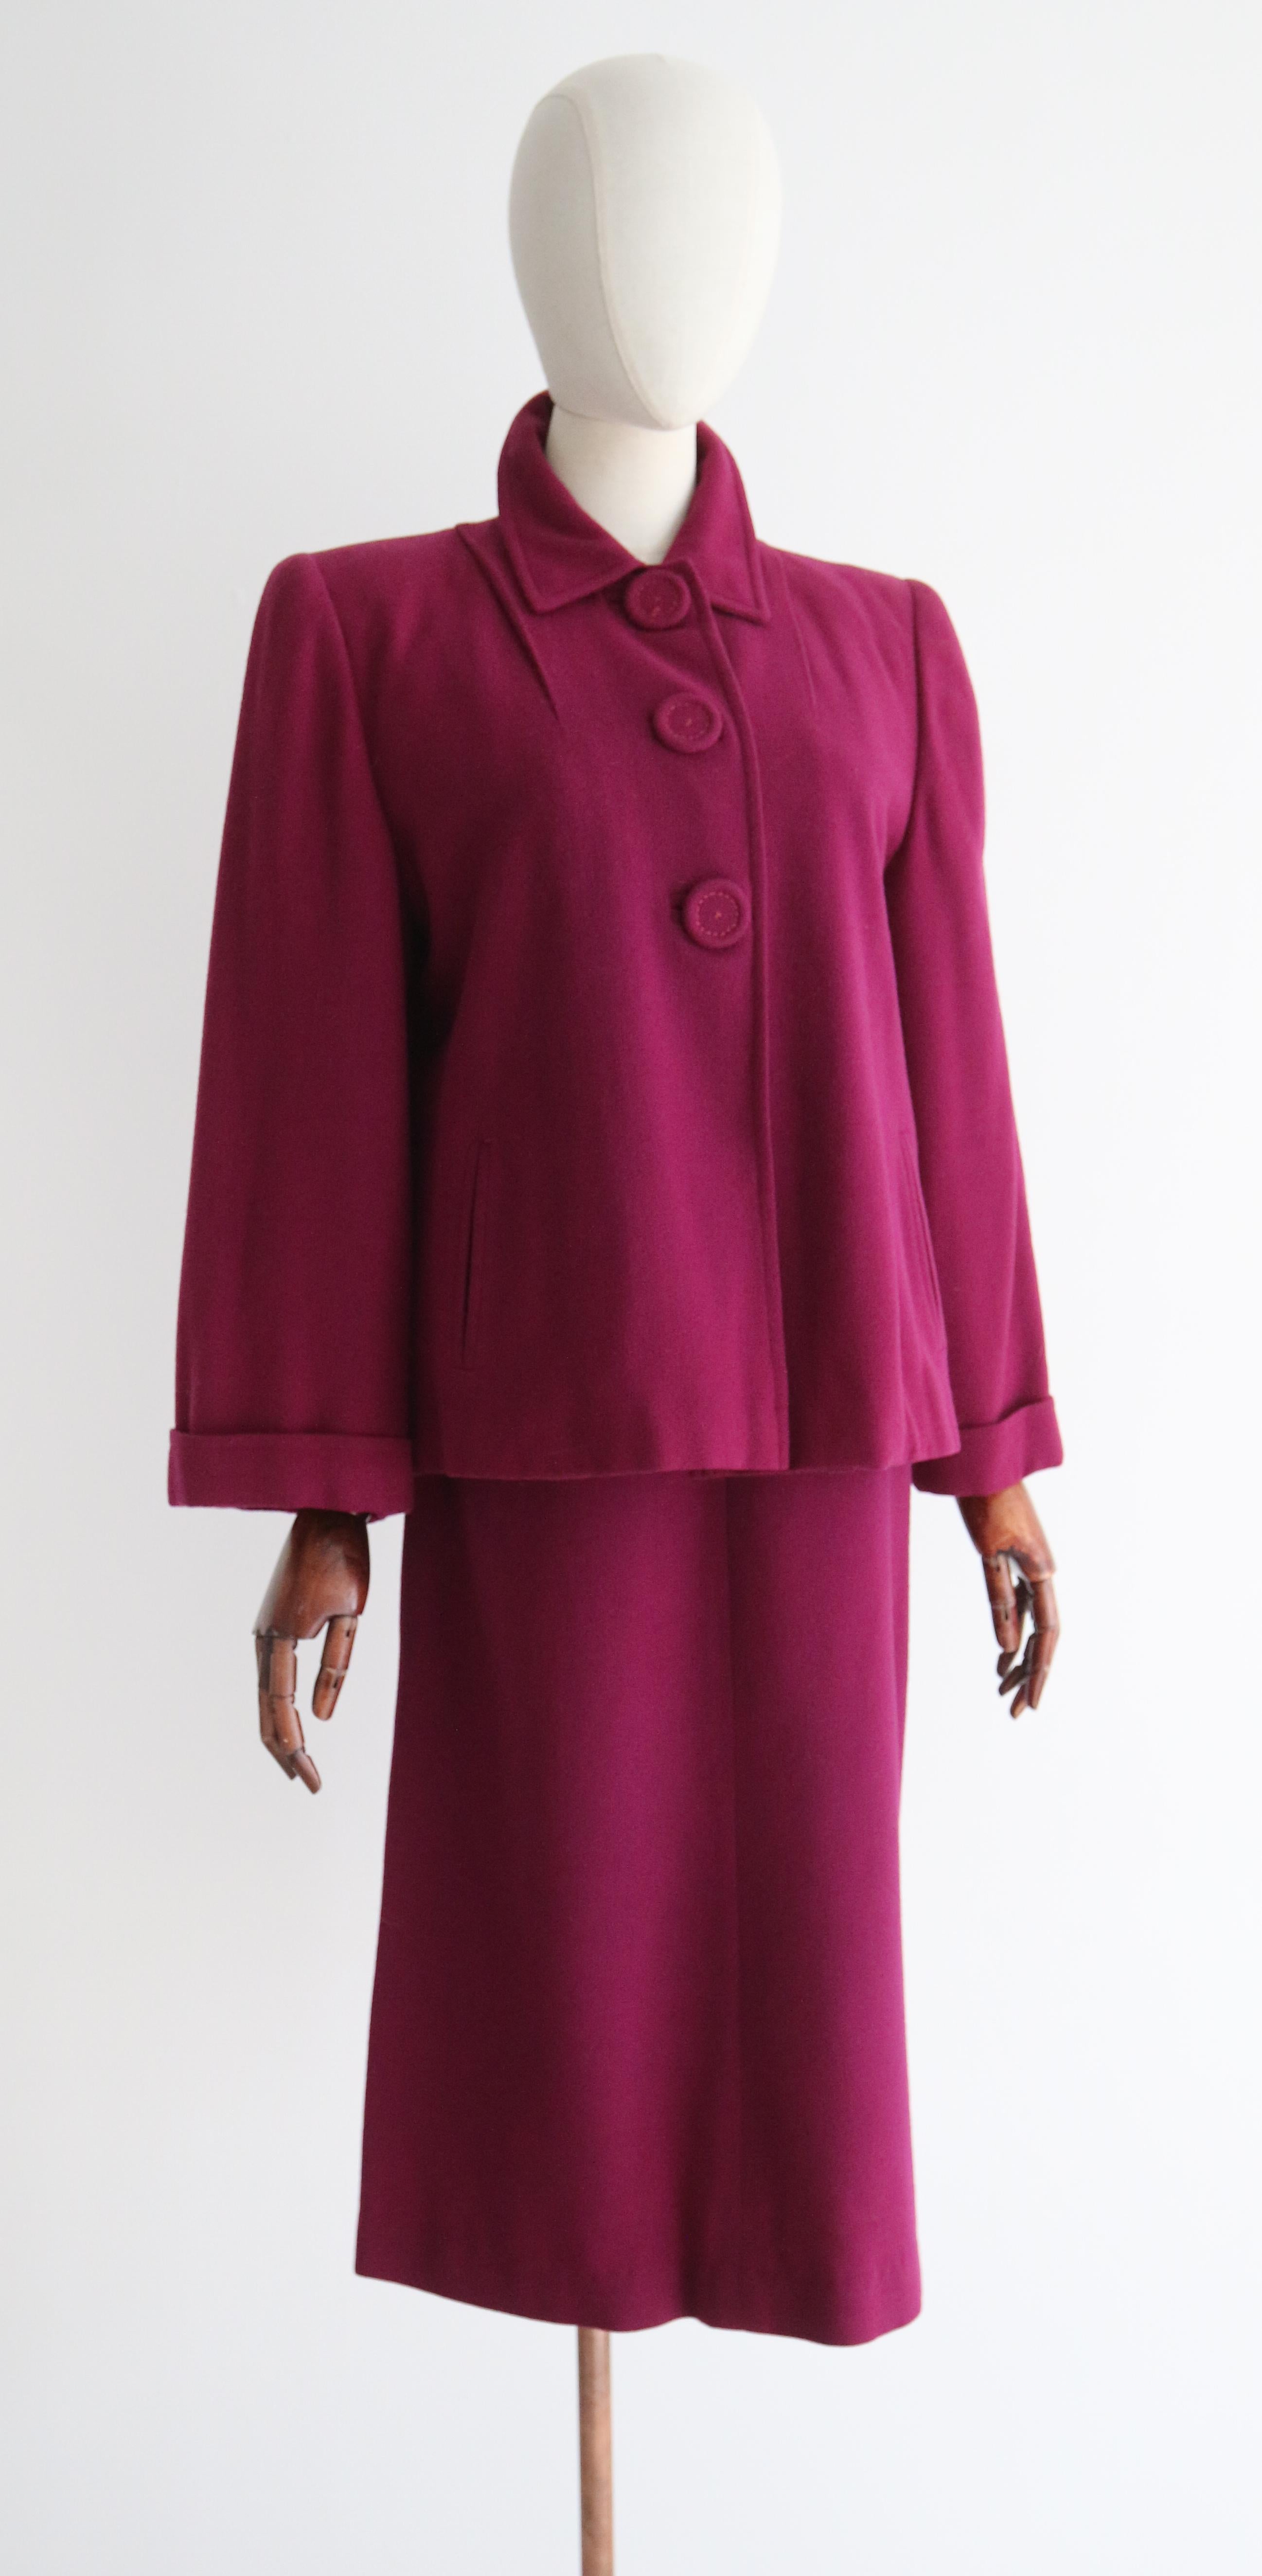 Rouge Costume en laine prune vintage des années 1940, taille UK 10-12 US 6-8 en vente